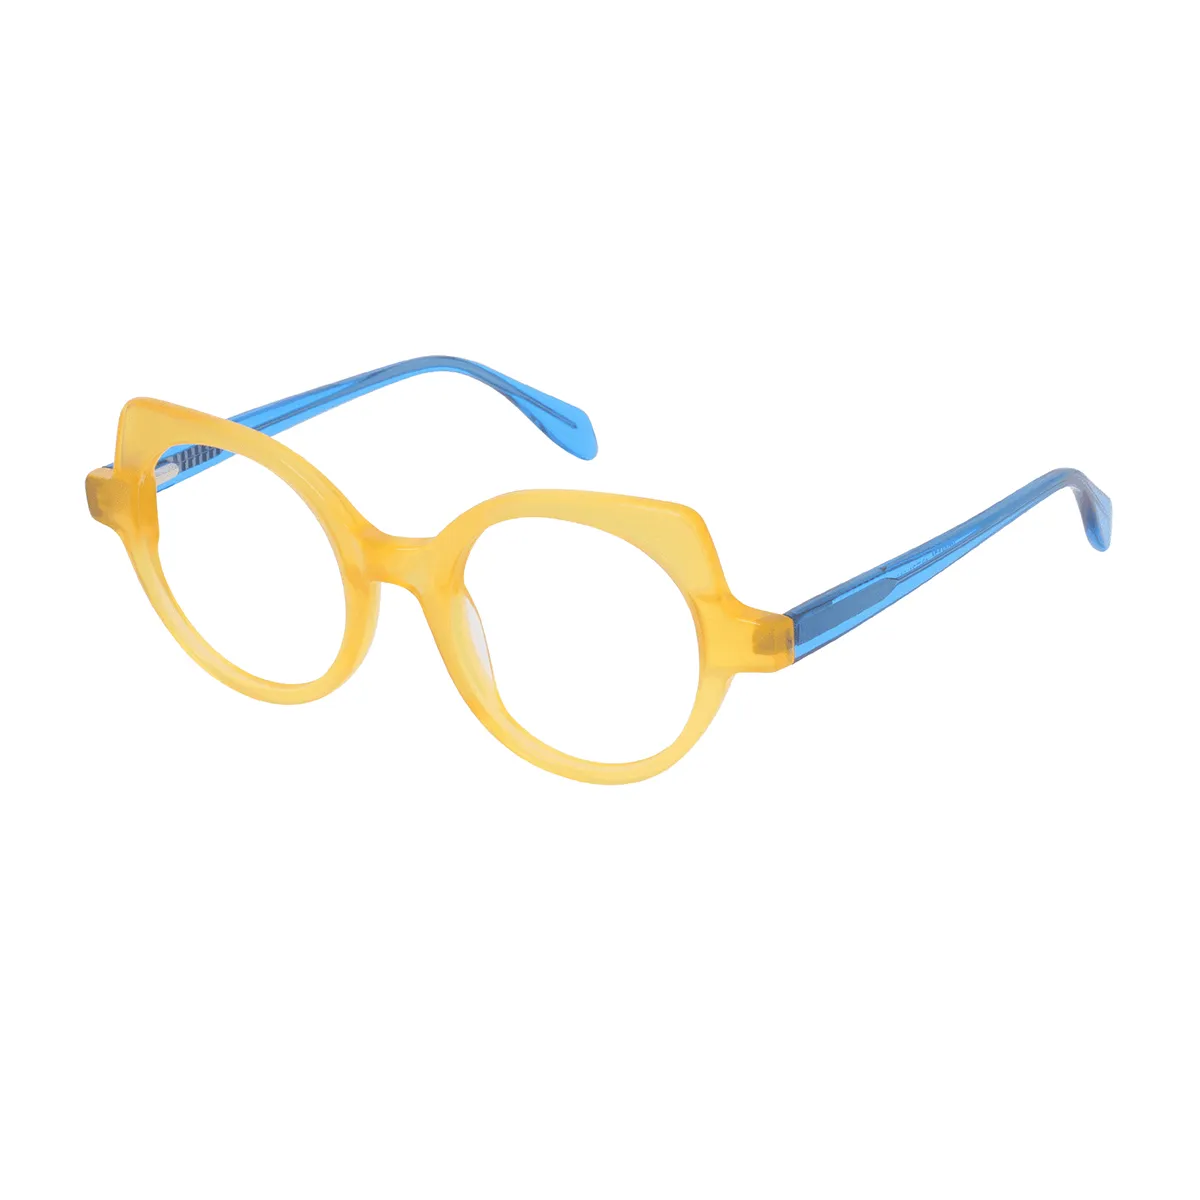 Molina - Geometric Yellow-Blue Glasses for Women